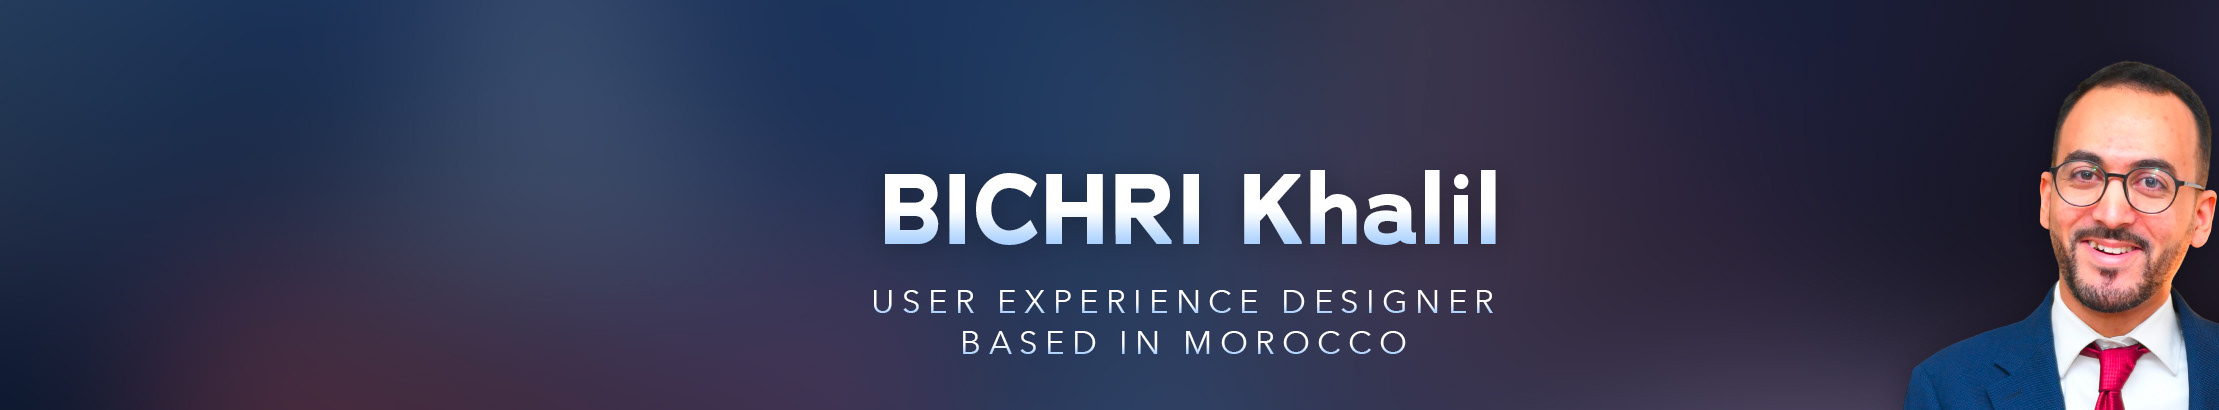 Khalil Bichri's profile banner